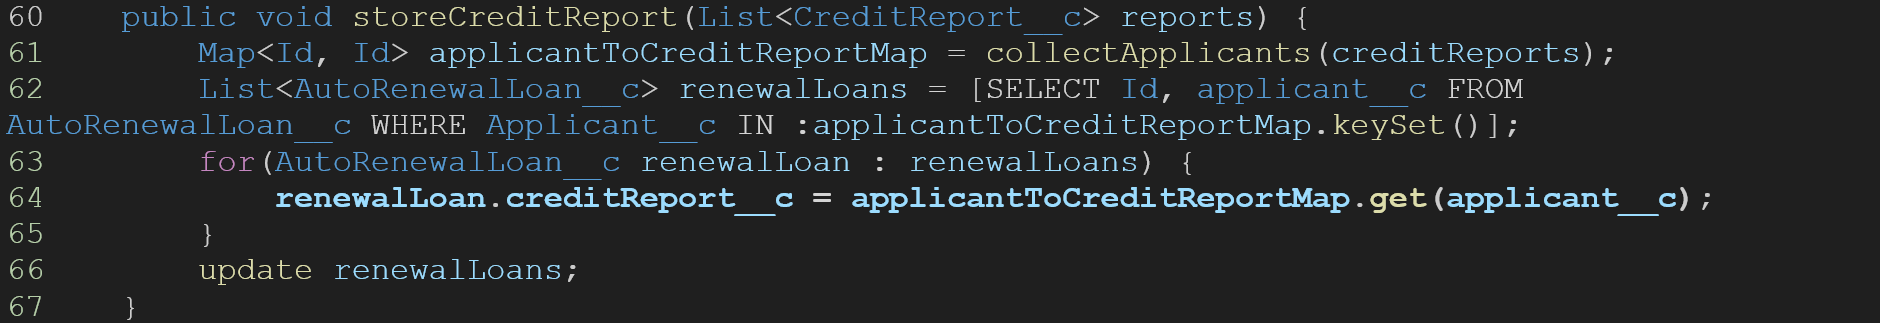 Store Credit Report code fragment